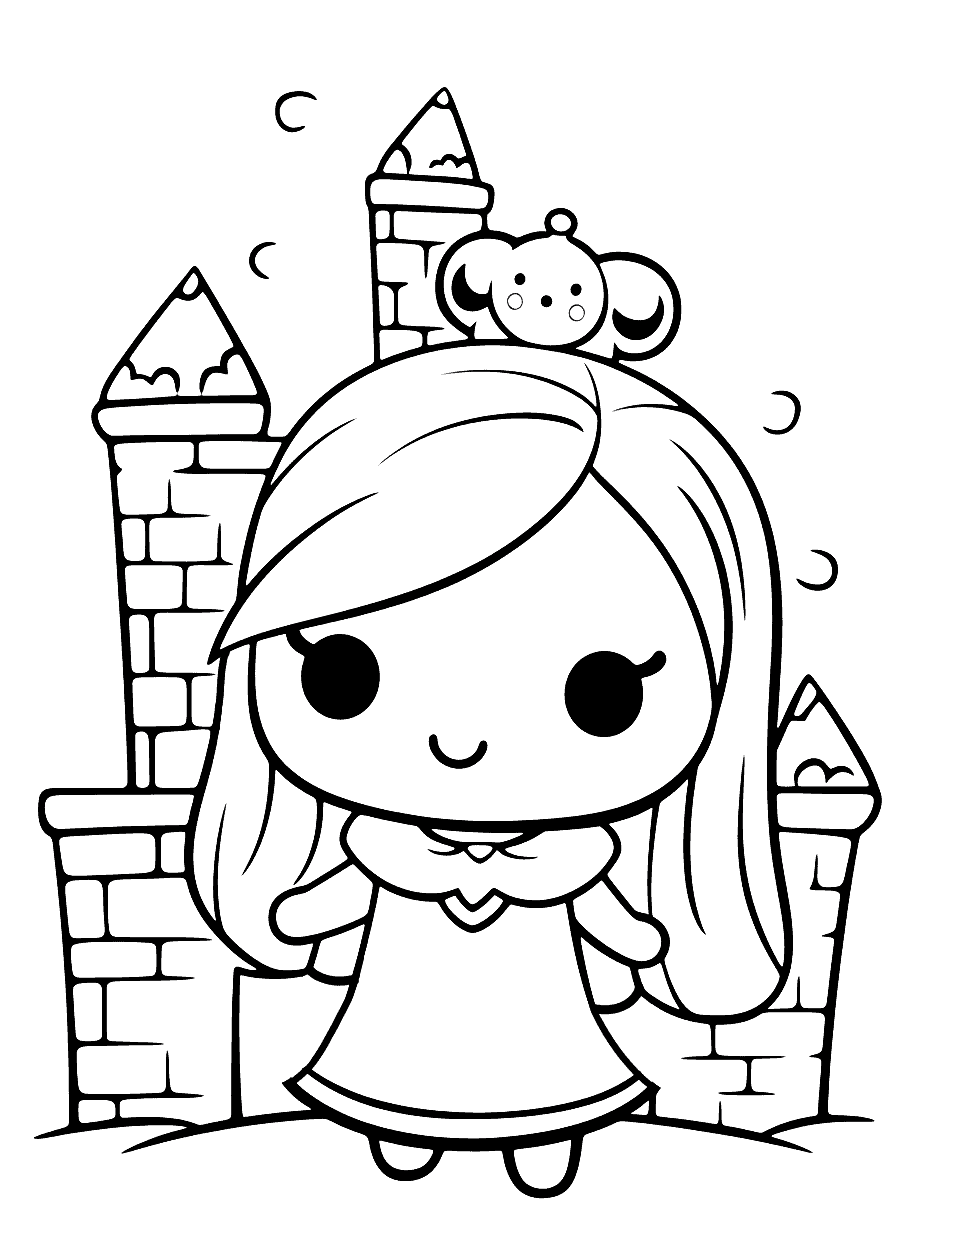 Adorable Princess in Chibi Castle Kawaii Coloring Page - A Kawaii princess exploring her beautiful chibi castle.